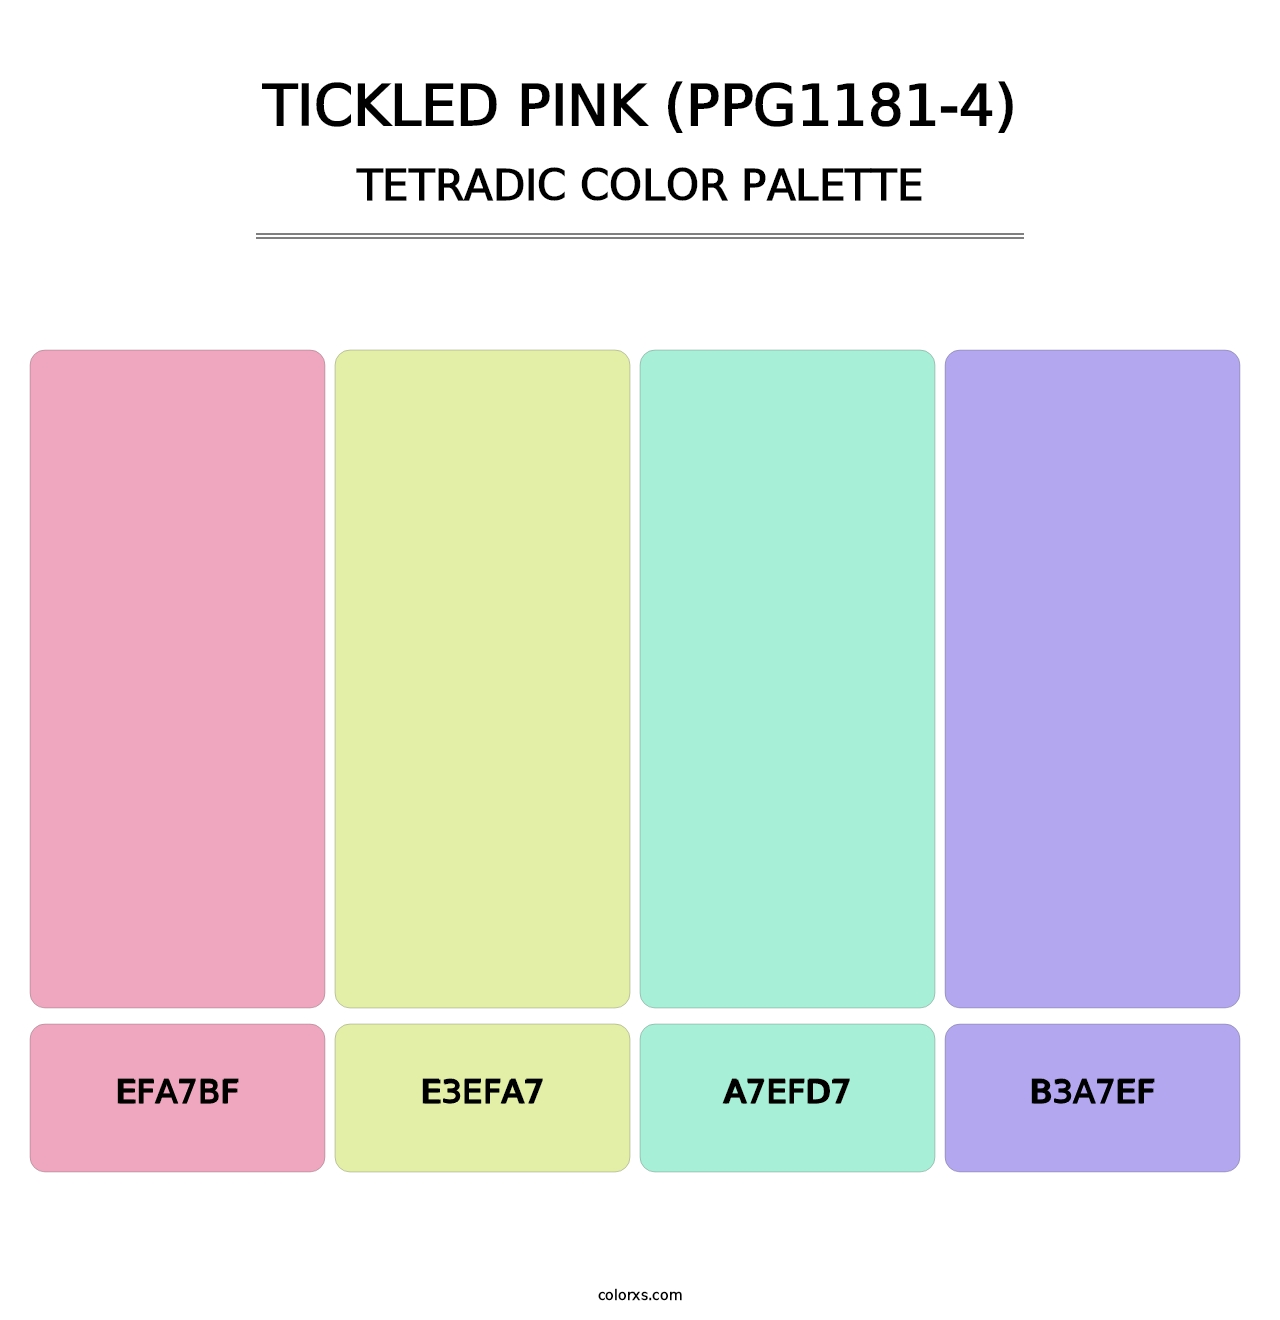 Tickled Pink (PPG1181-4) - Tetradic Color Palette